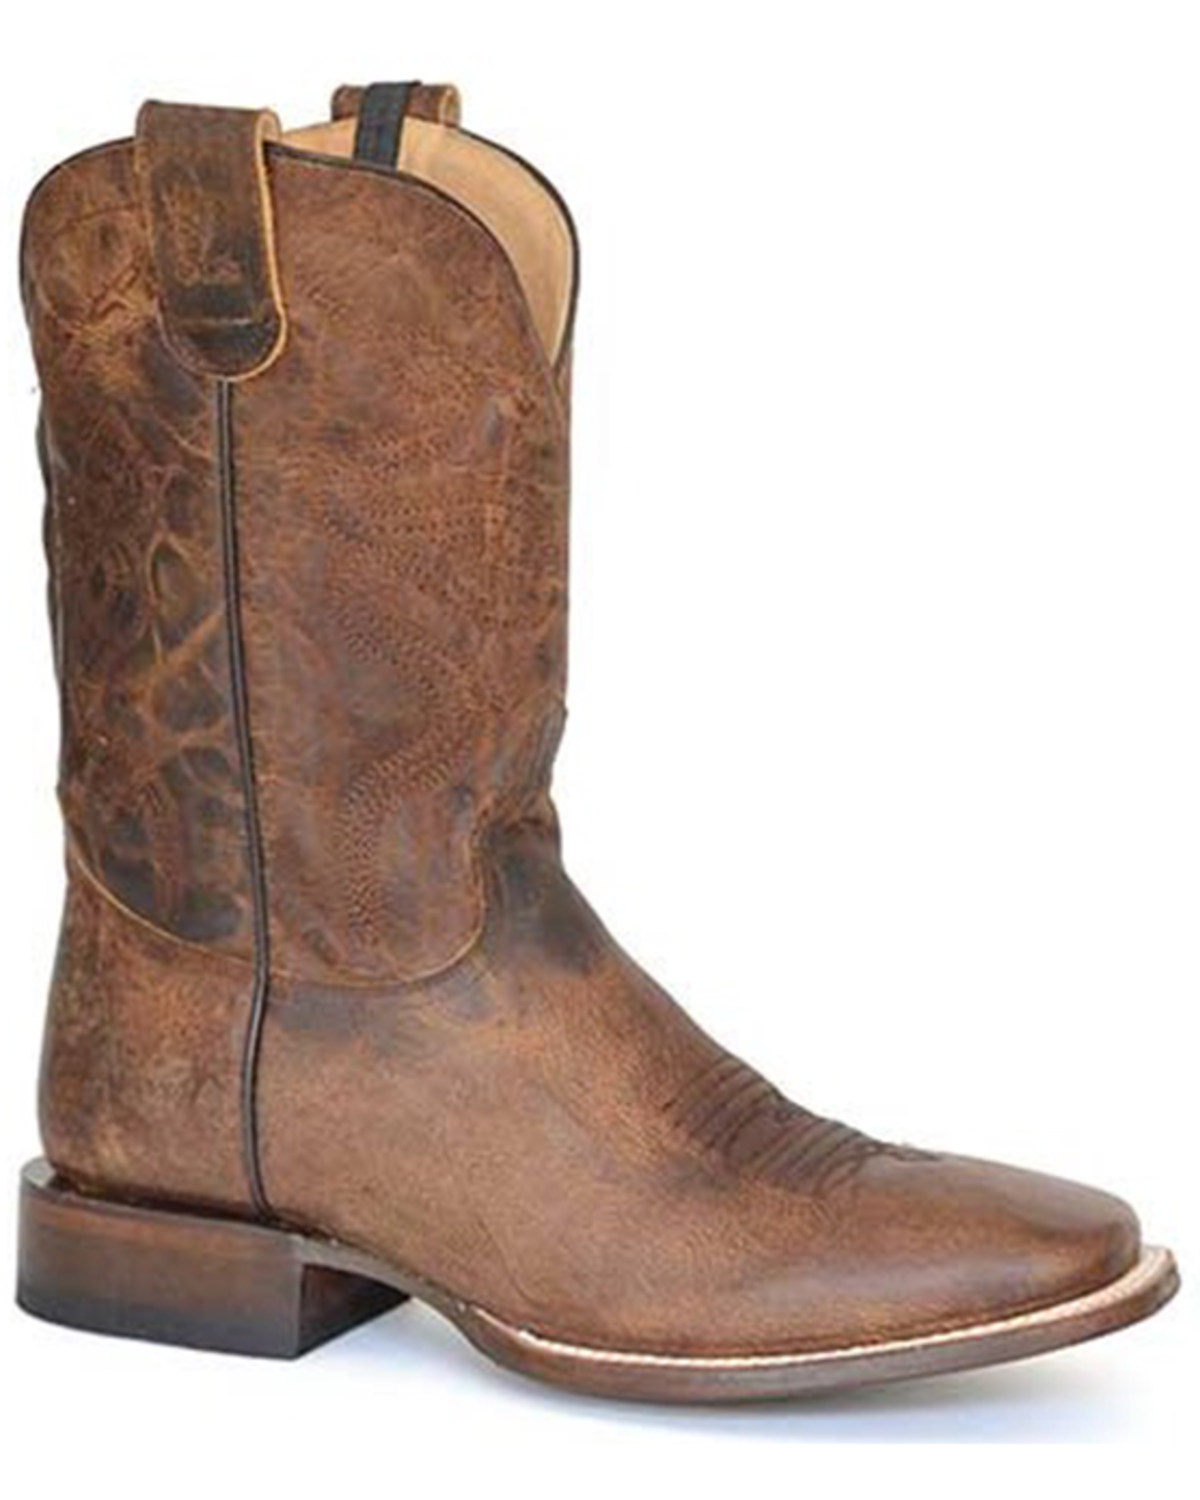 Roper Men's Snake Eyes Western Boots - Square Toe